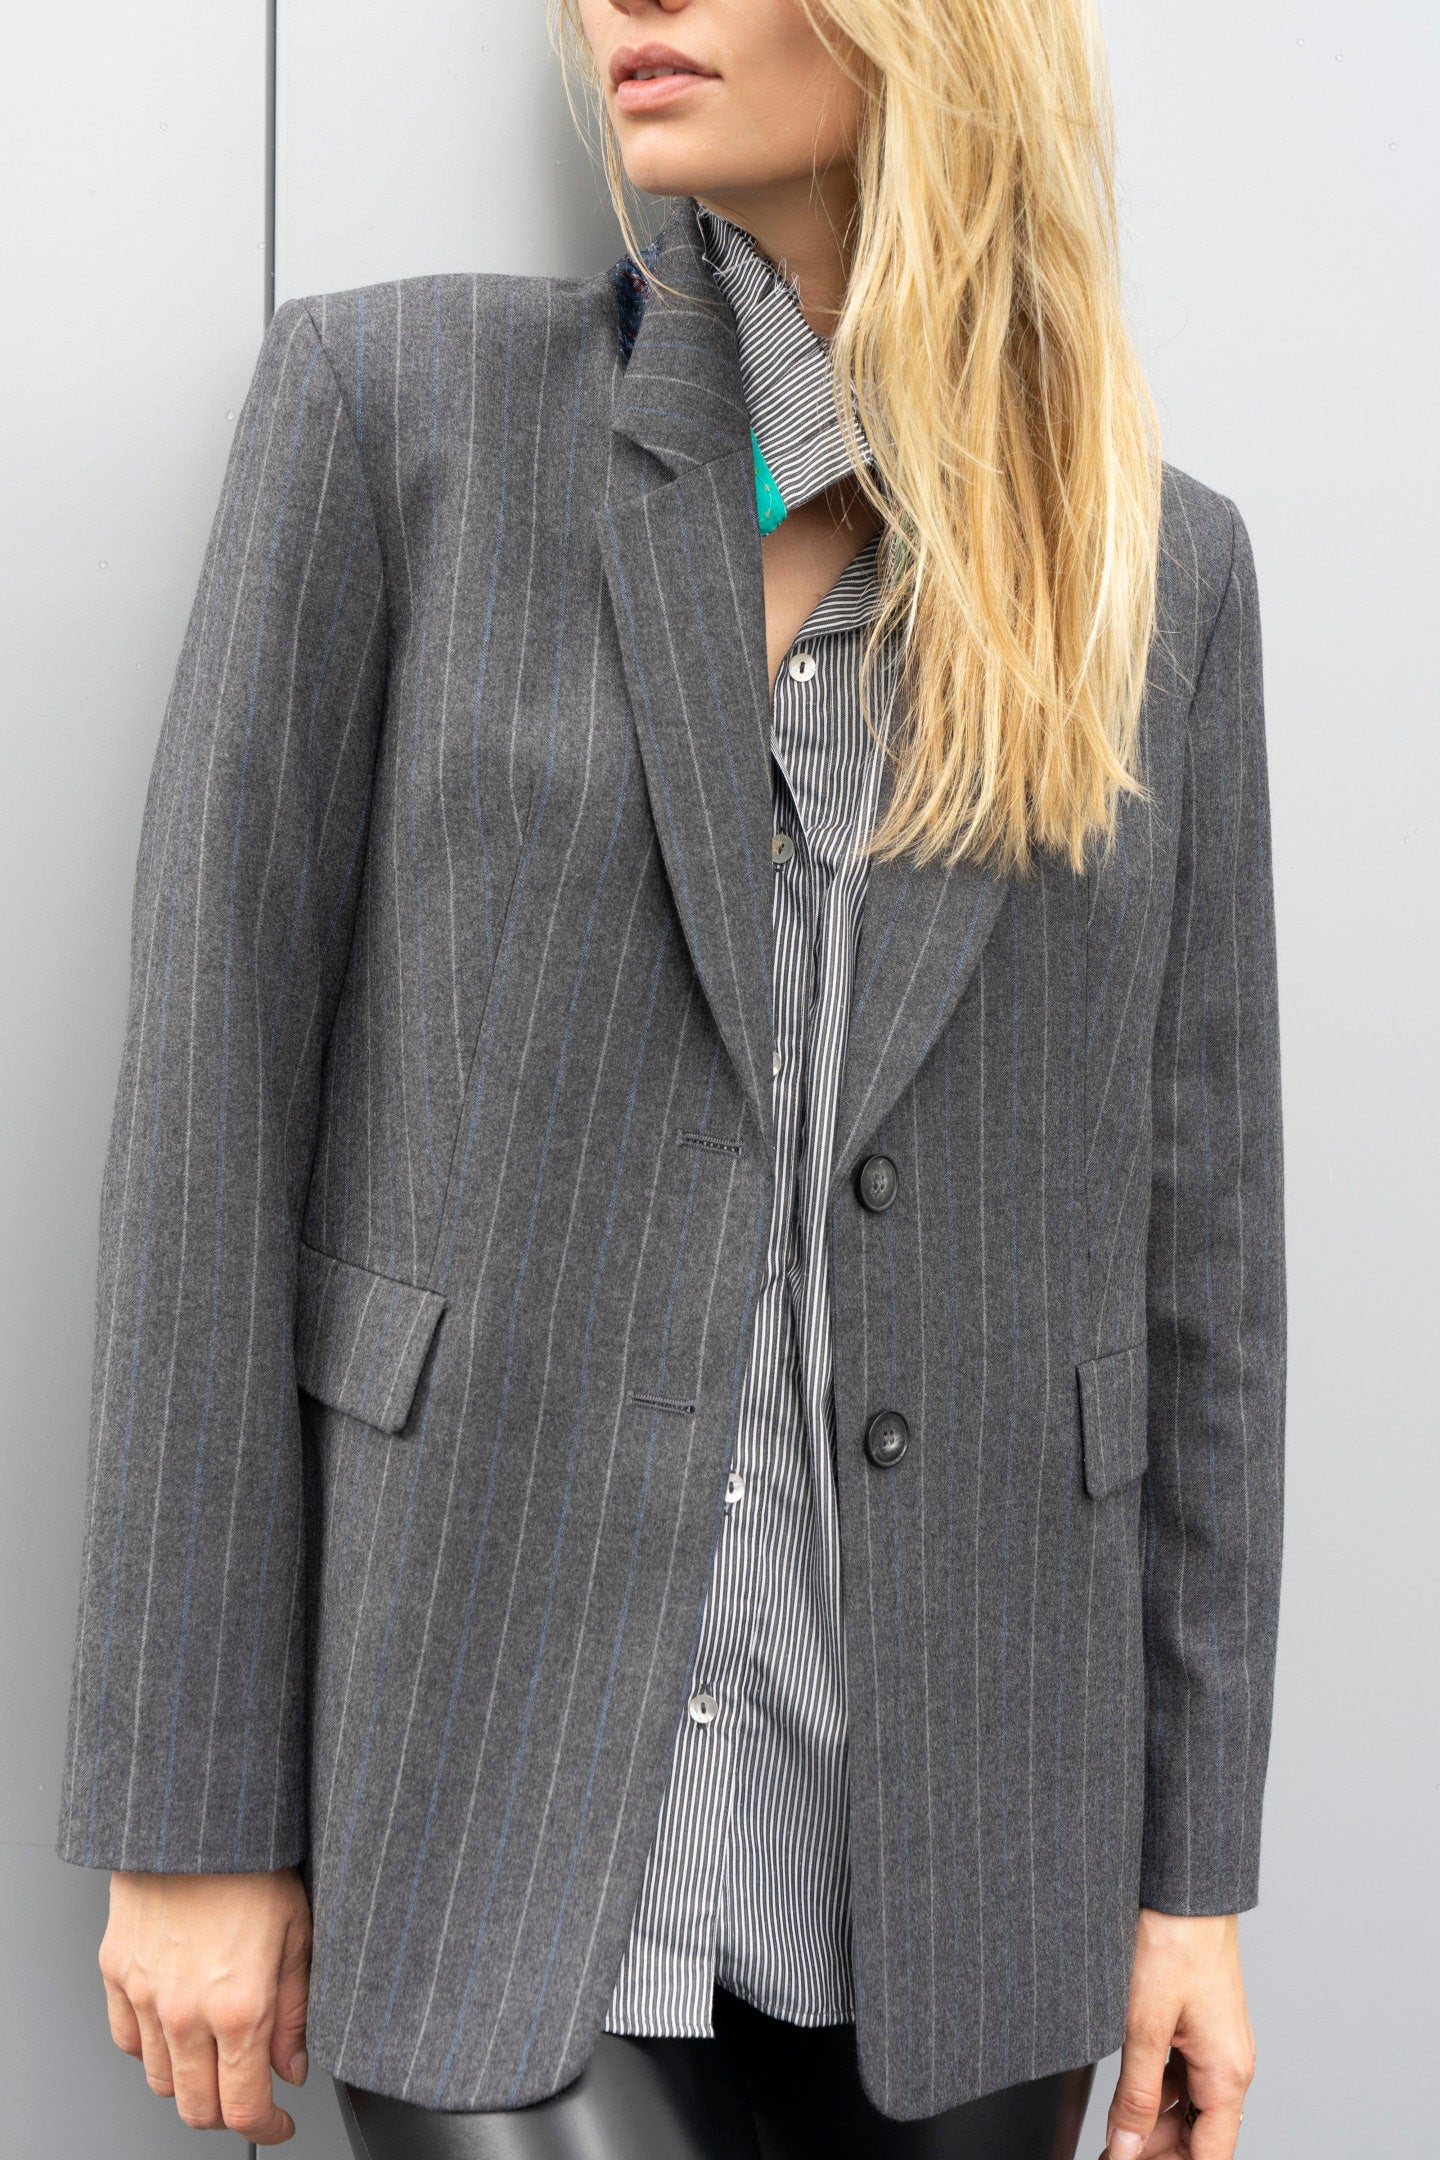 La Audrey - Oversized blazer jacket Wool with white chalk stripes Blue &amp; gold paisley print lining